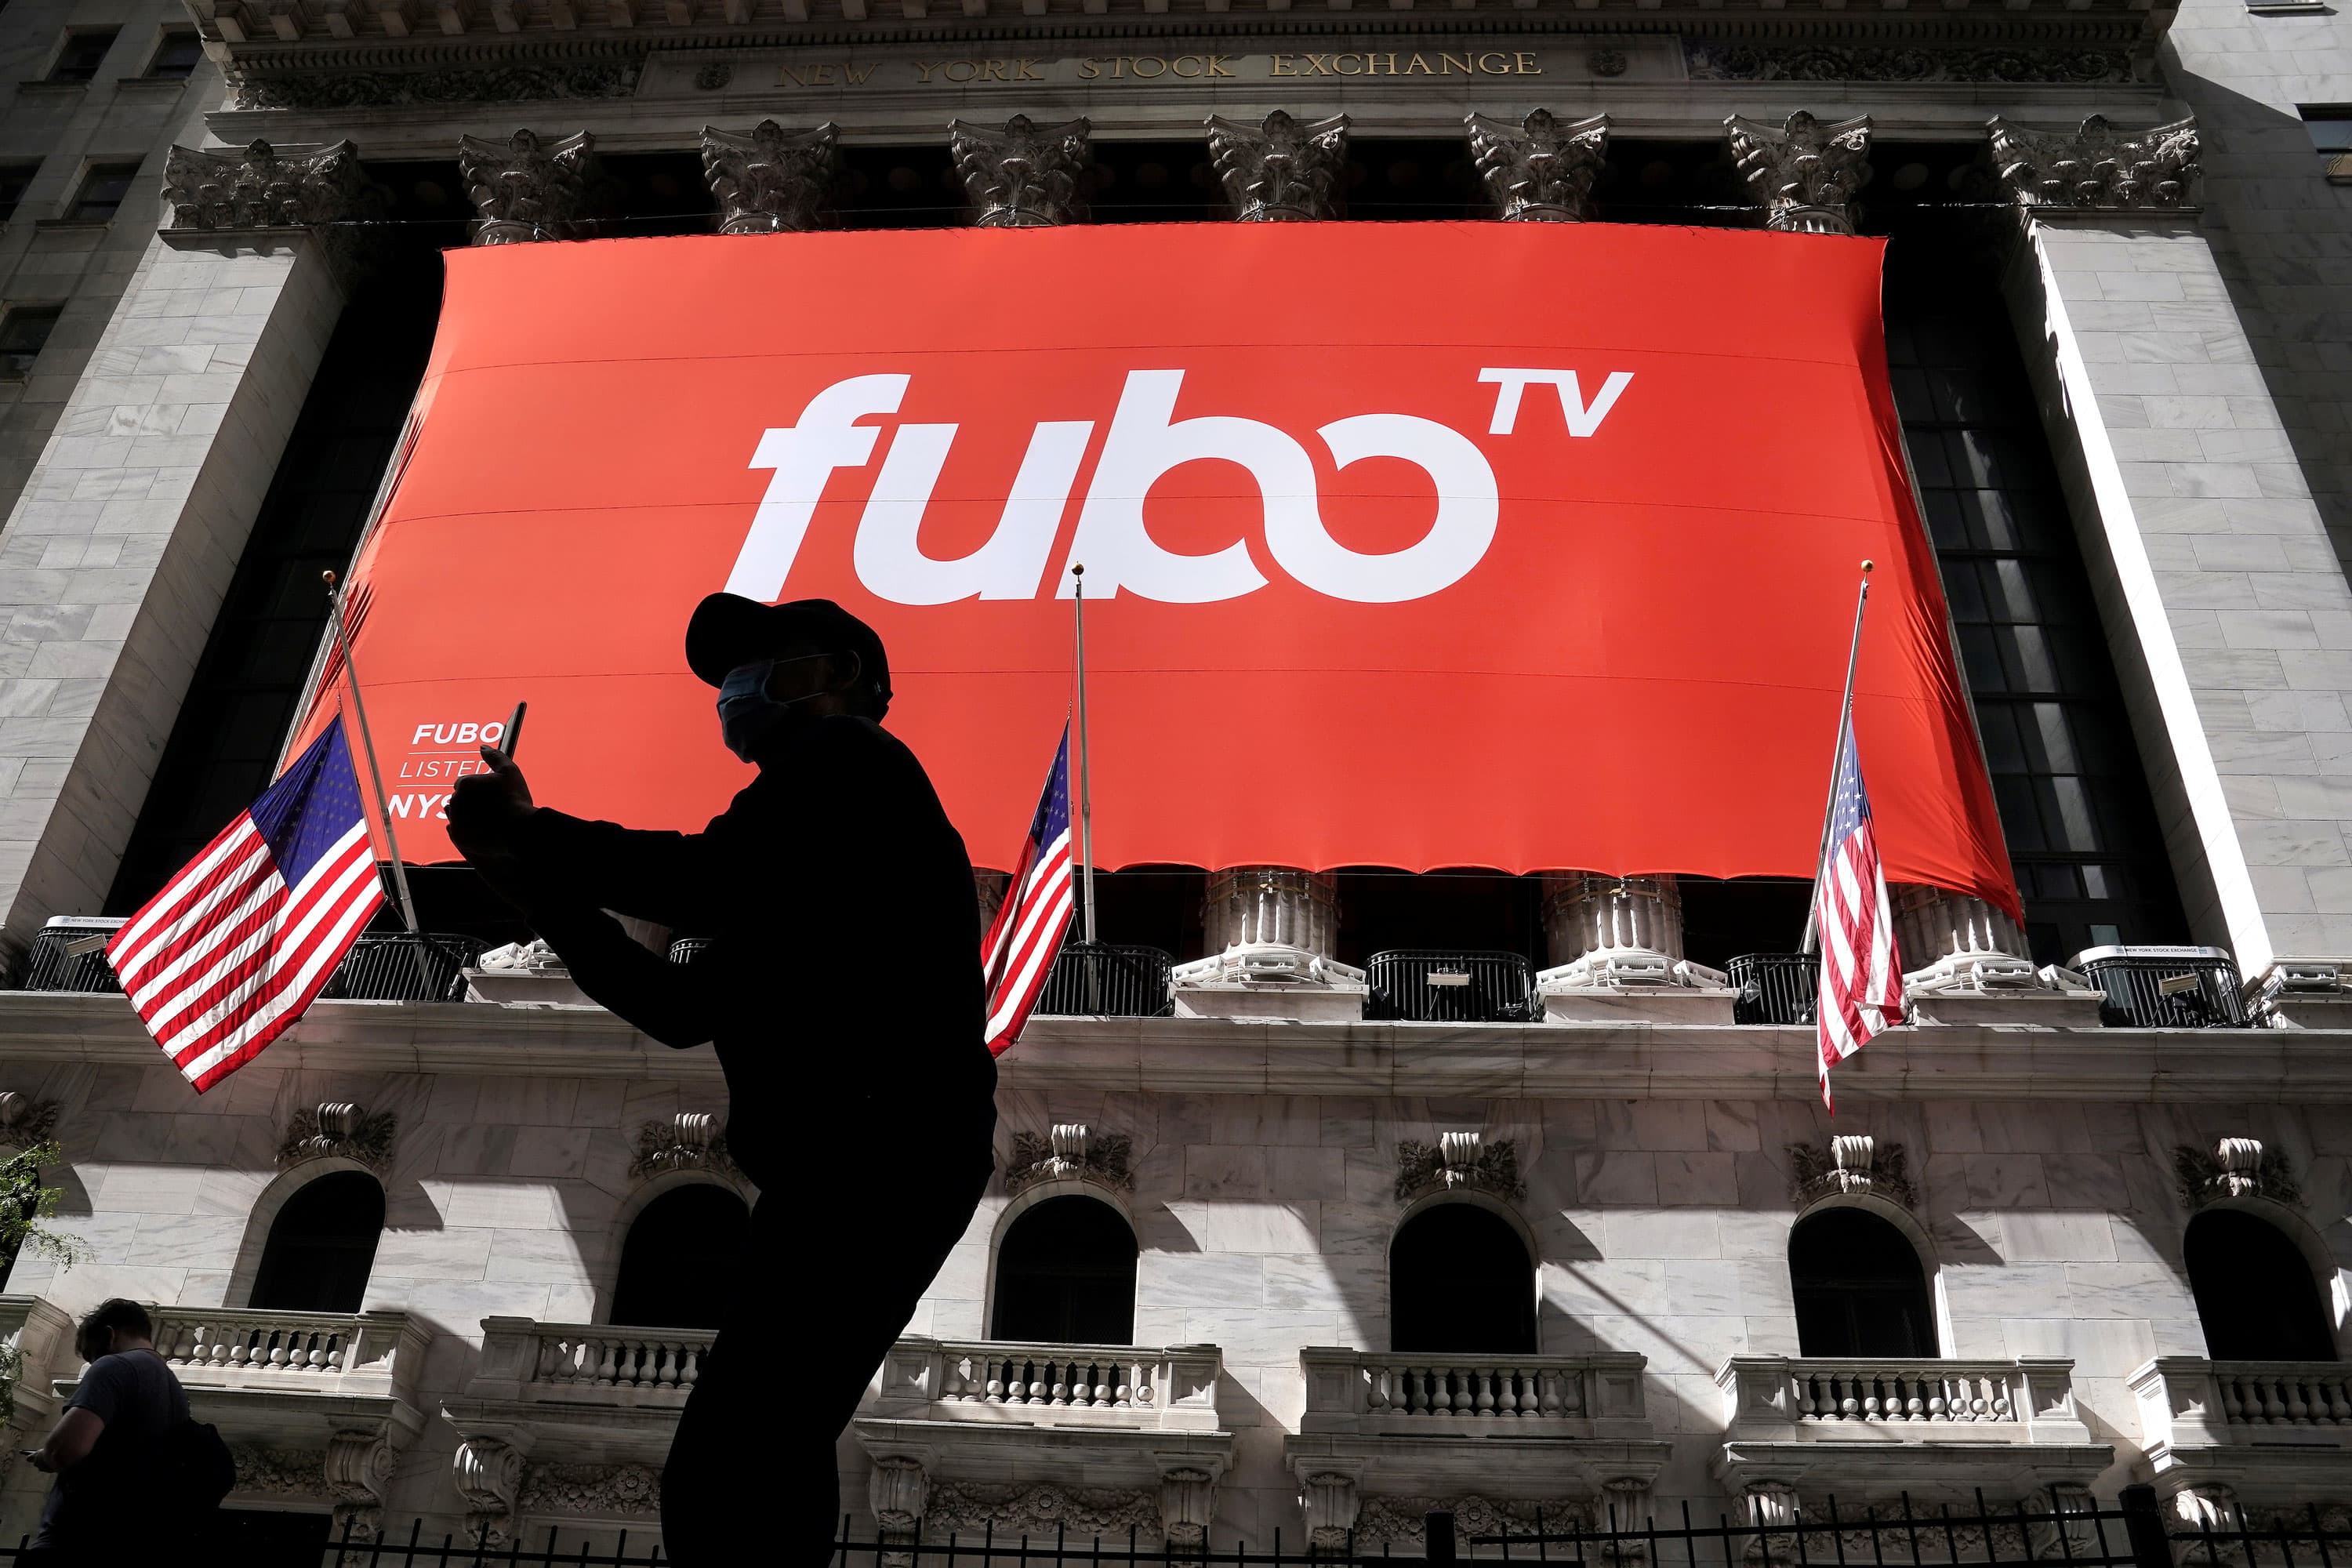 JPMorgan downgrades FuboTV, sees an unclear path to profitability